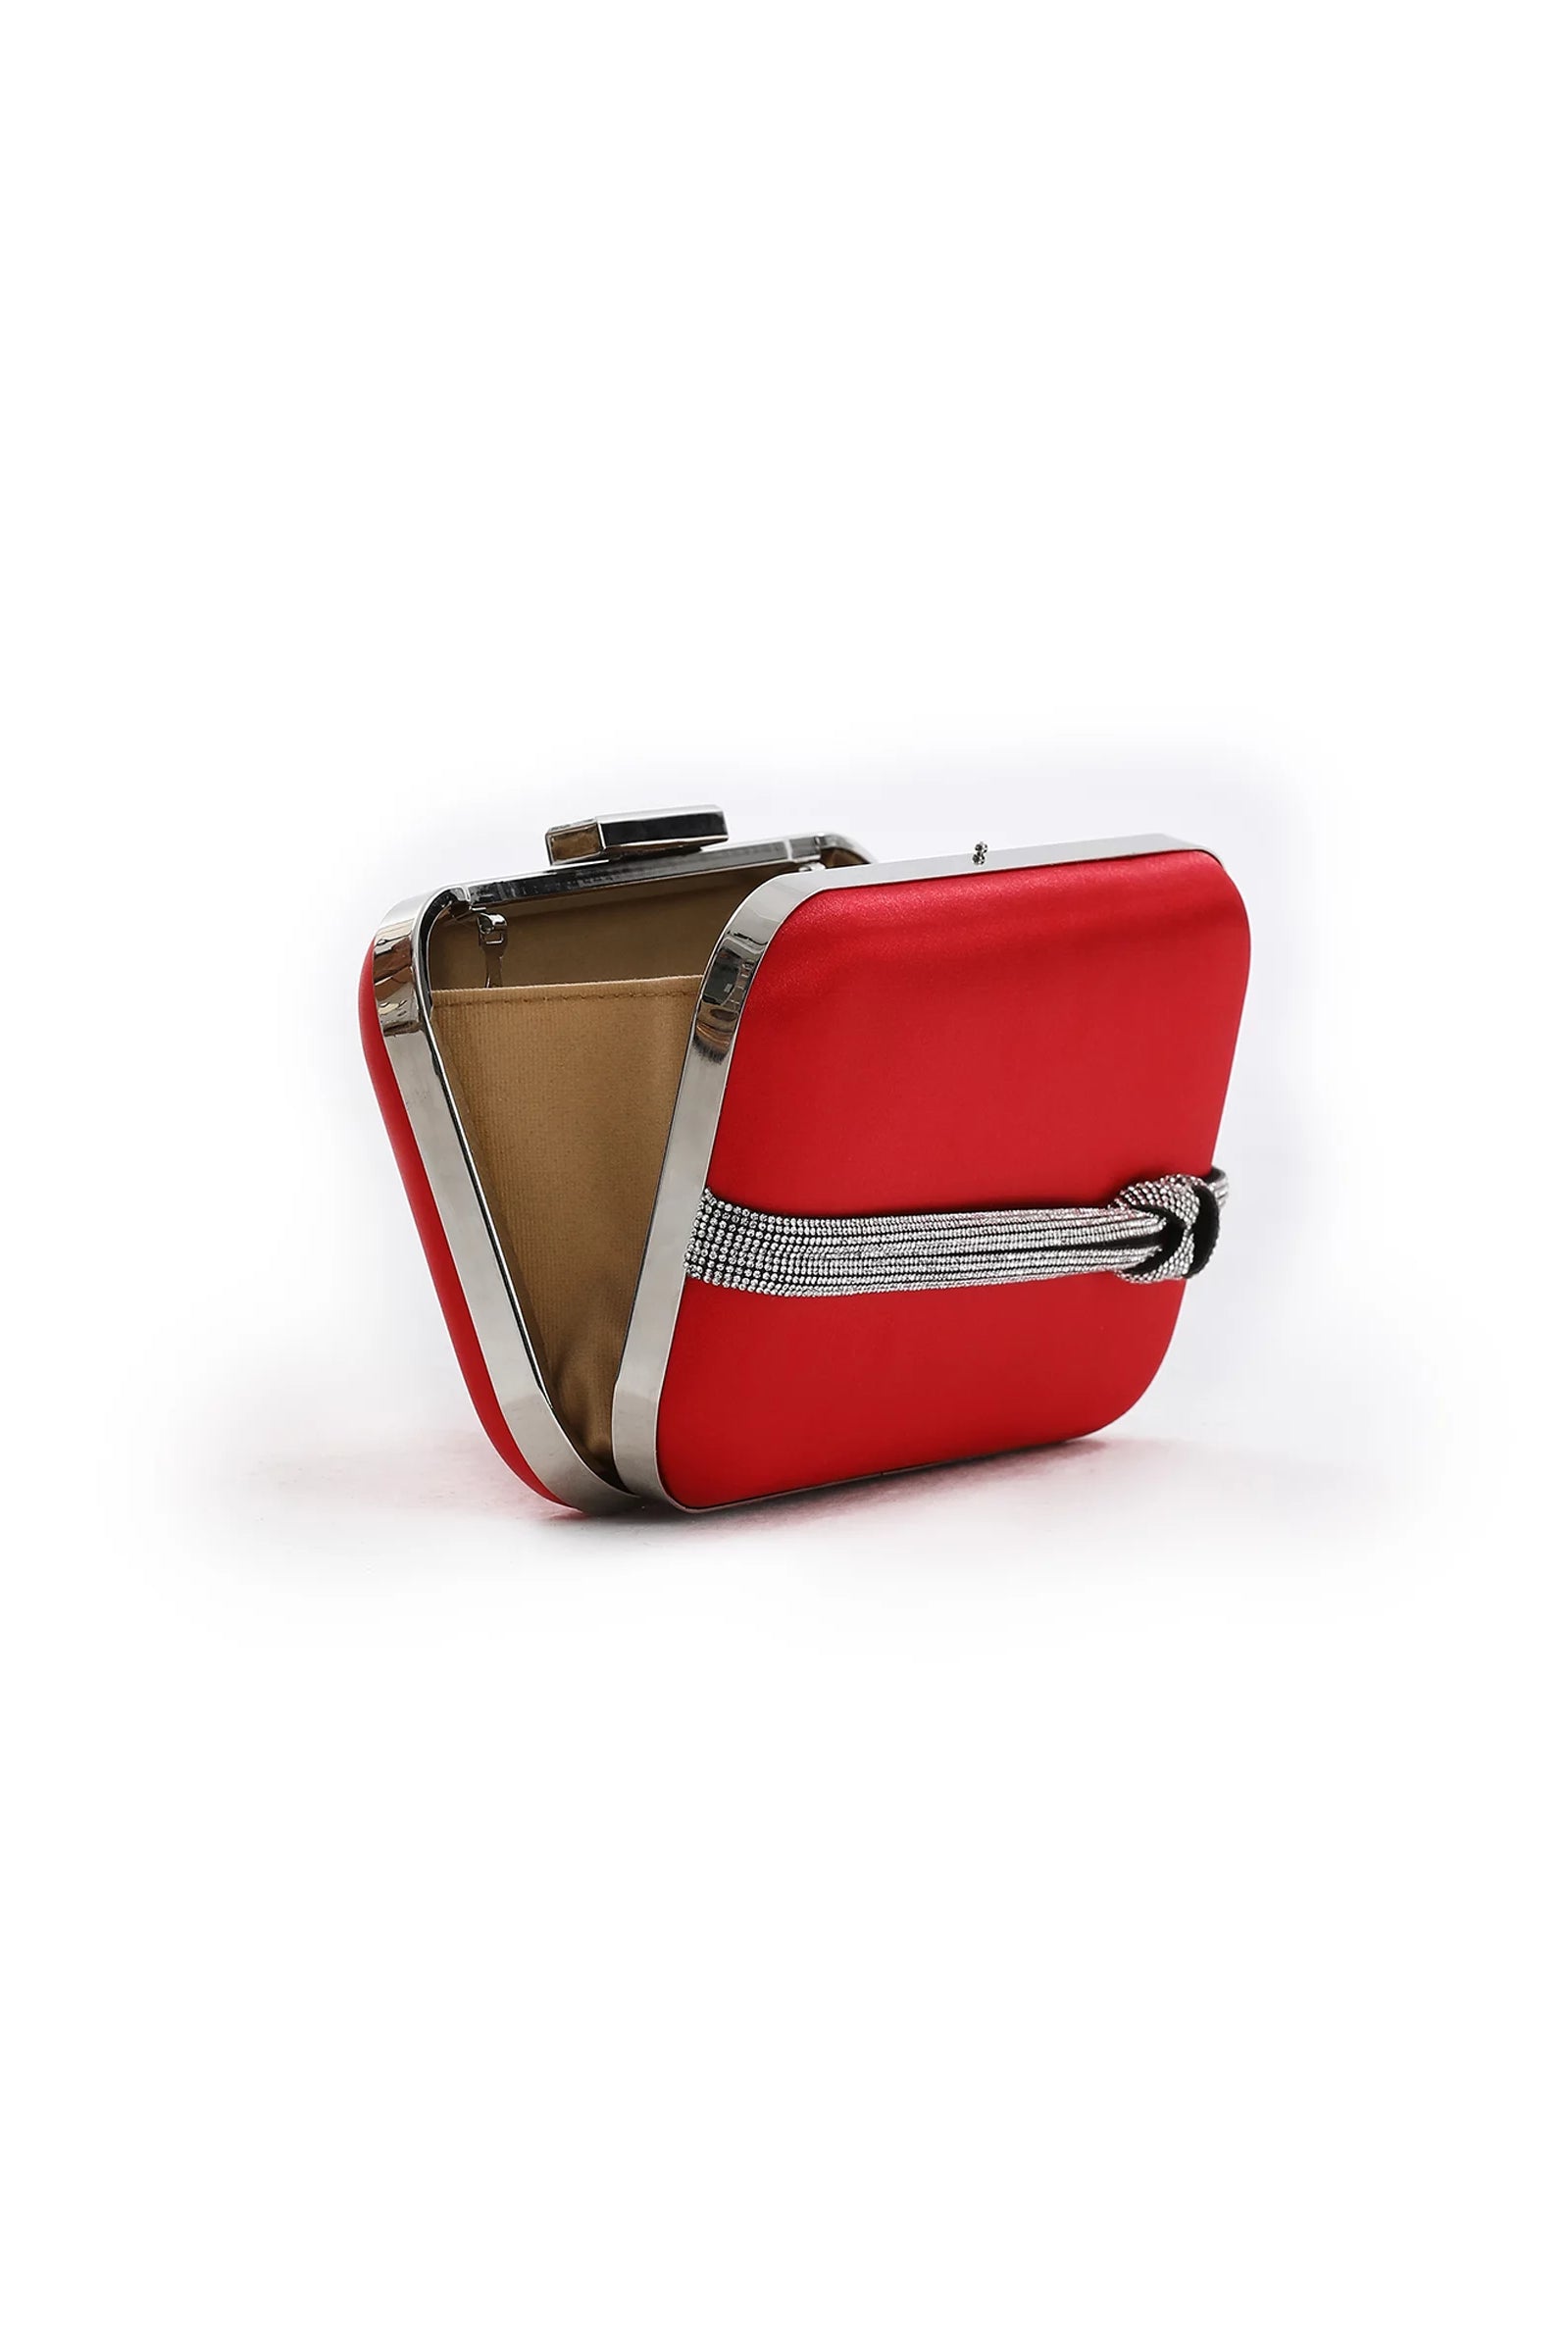 Red Satin Clutch Bag